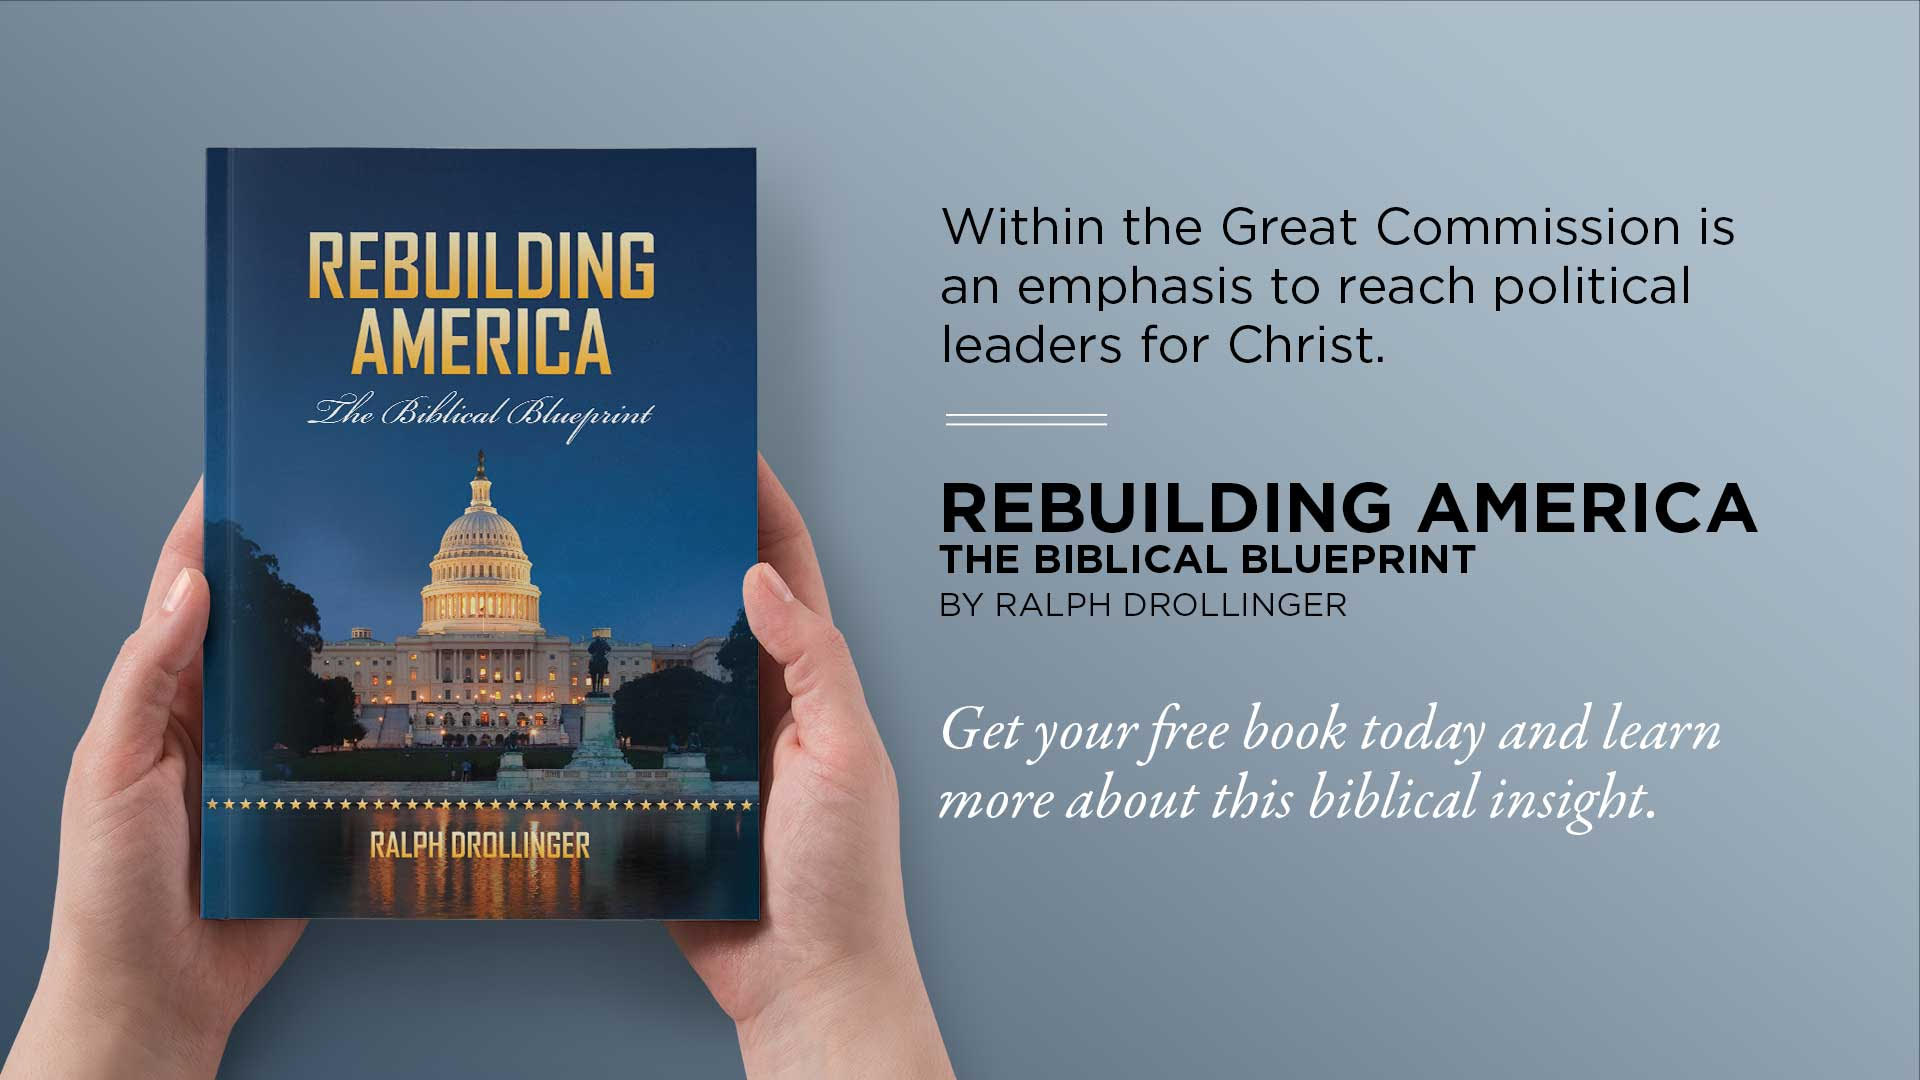 Rebuilding America by Ralph Drollinger